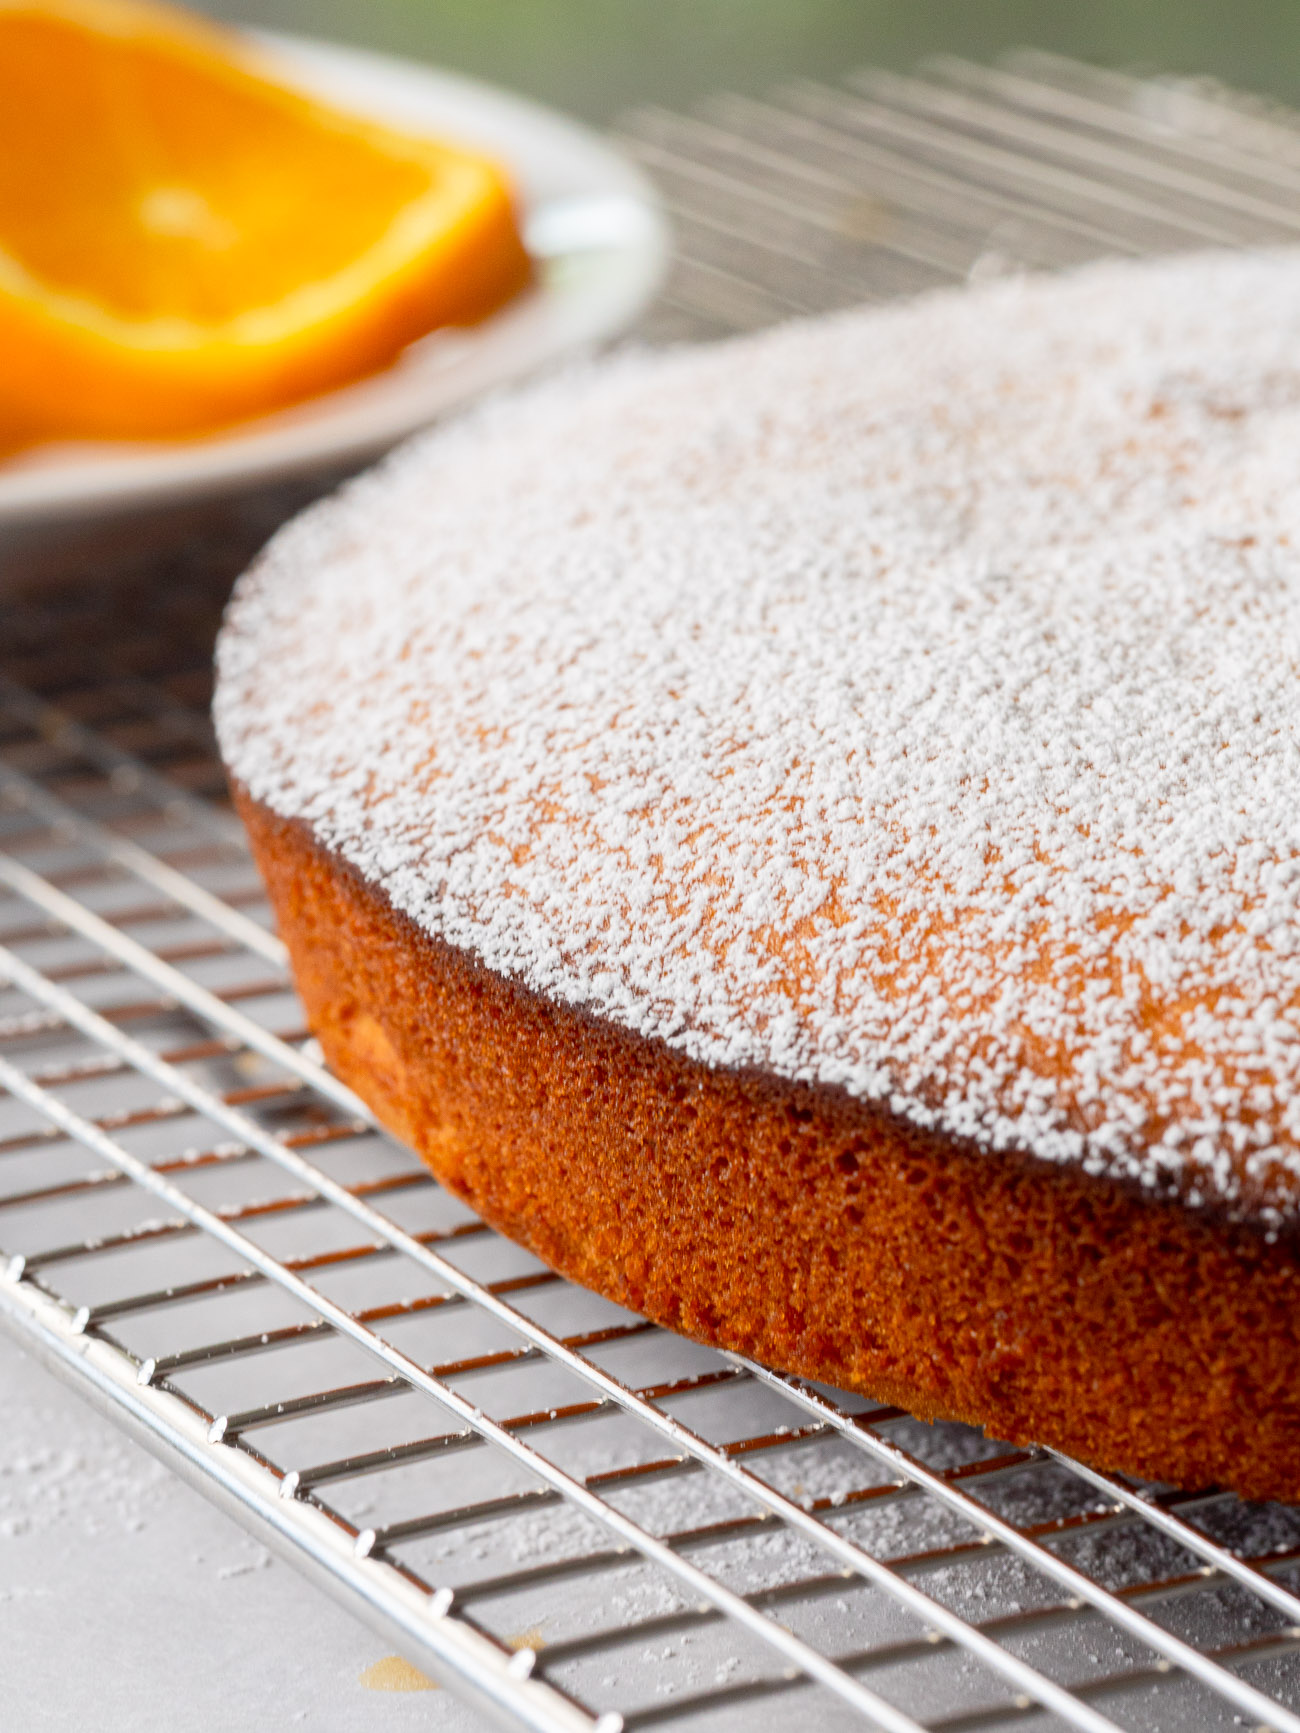 The Best Orange Cake Recipe | Simple. Tasty. Good.